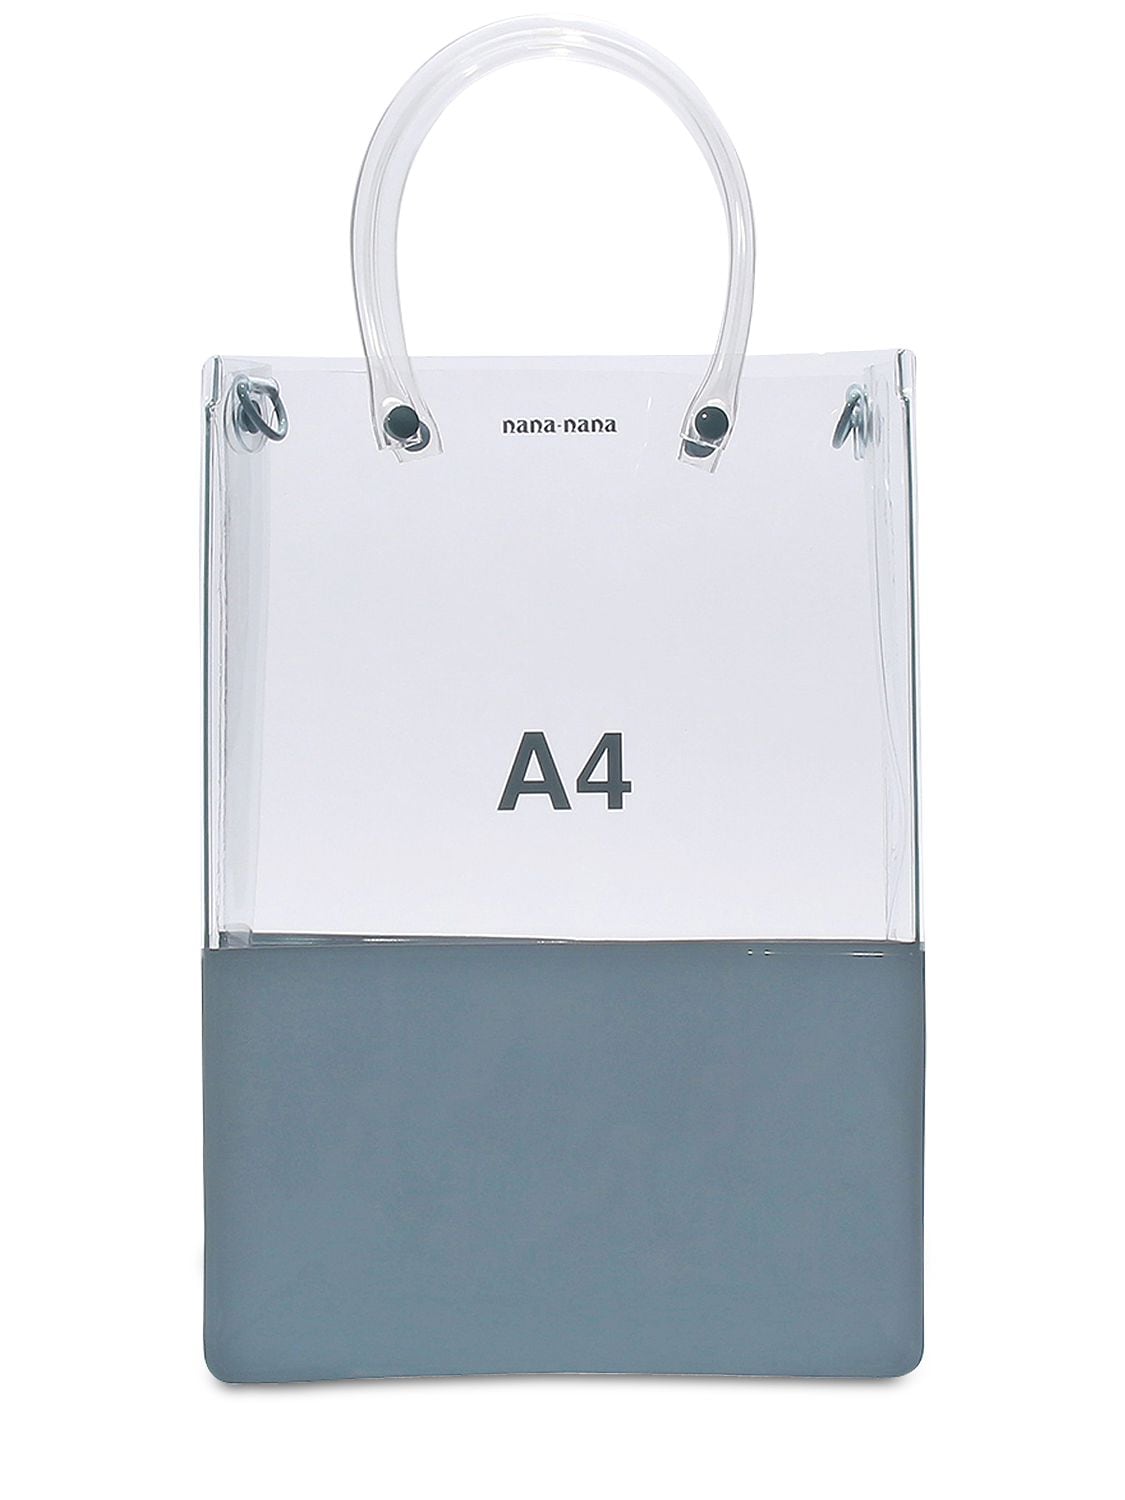 Nana-nana A4 Pvc Shopping Bag In Clear,grey